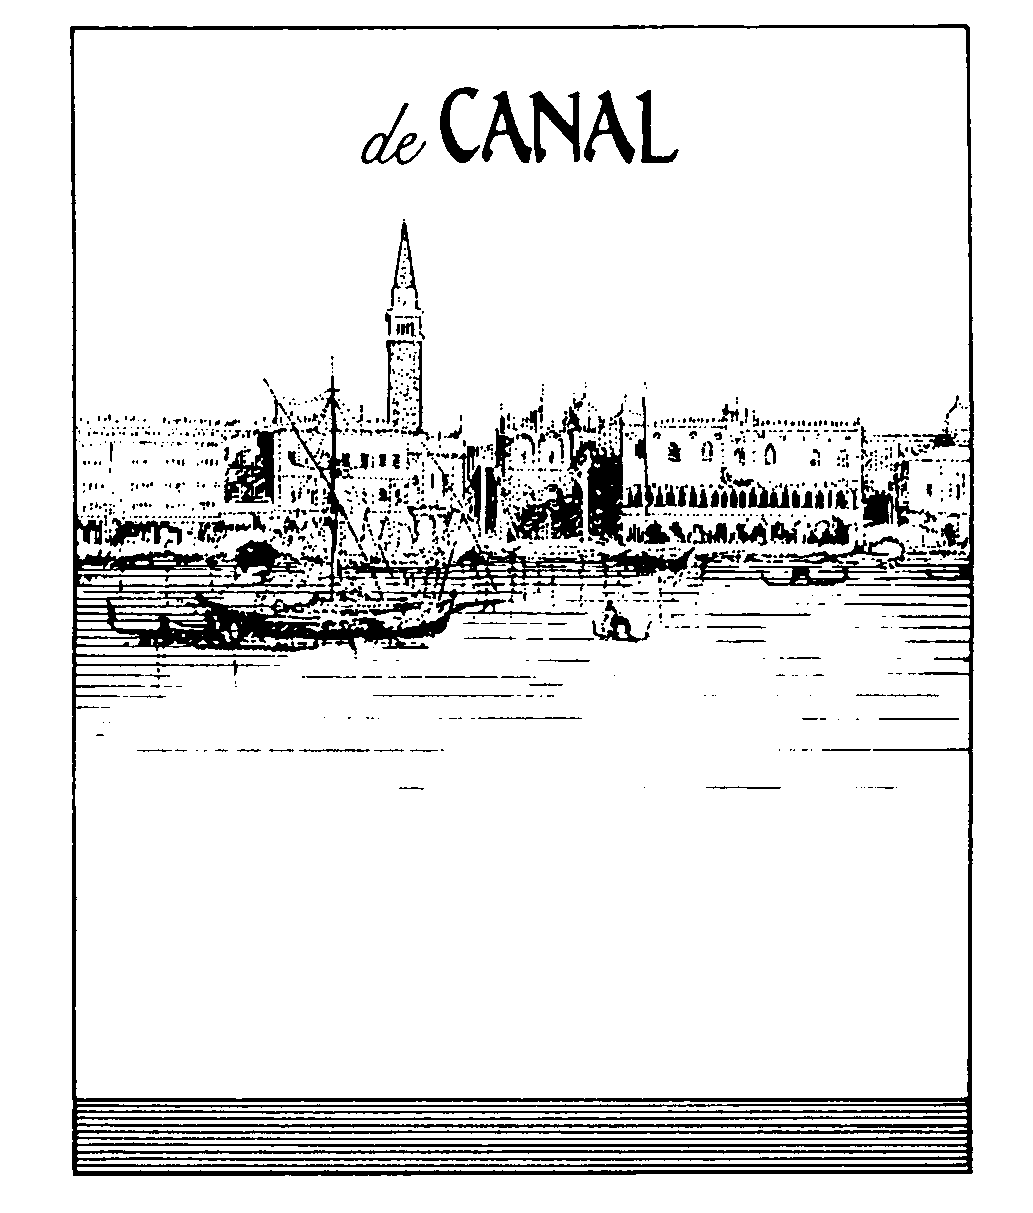  DE CANAL